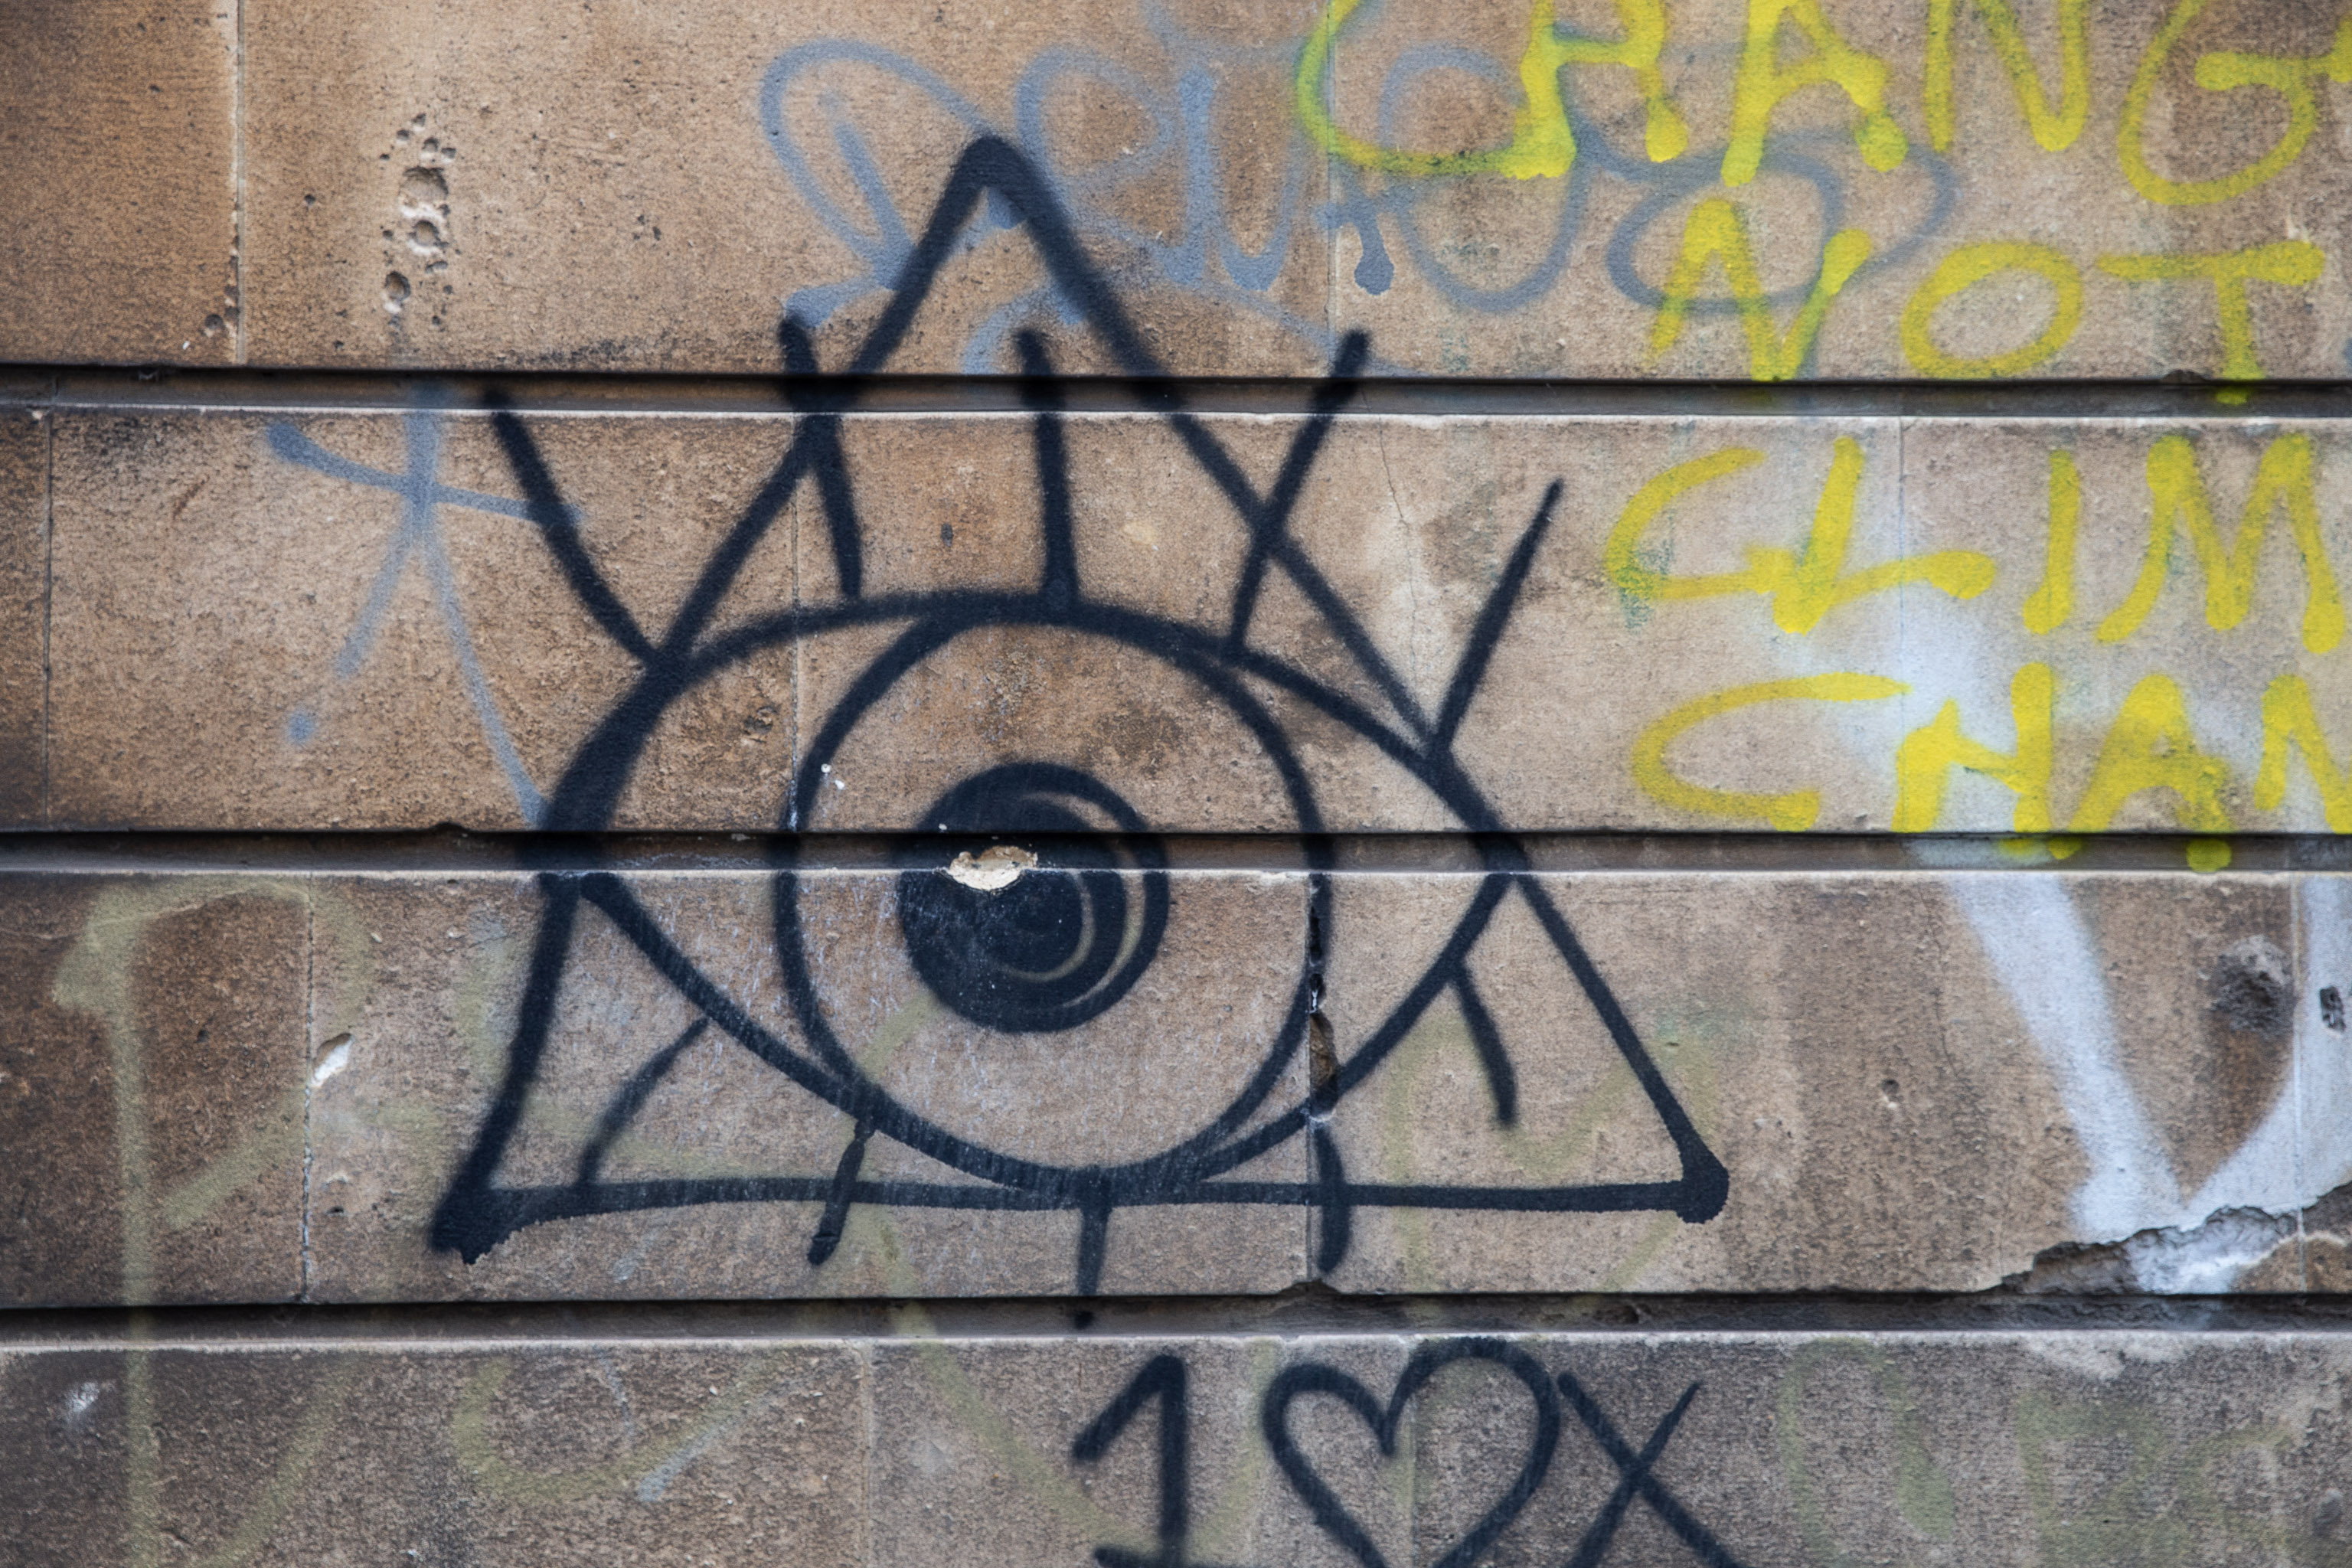 The Eye of Providence
Those illuminati get about.
